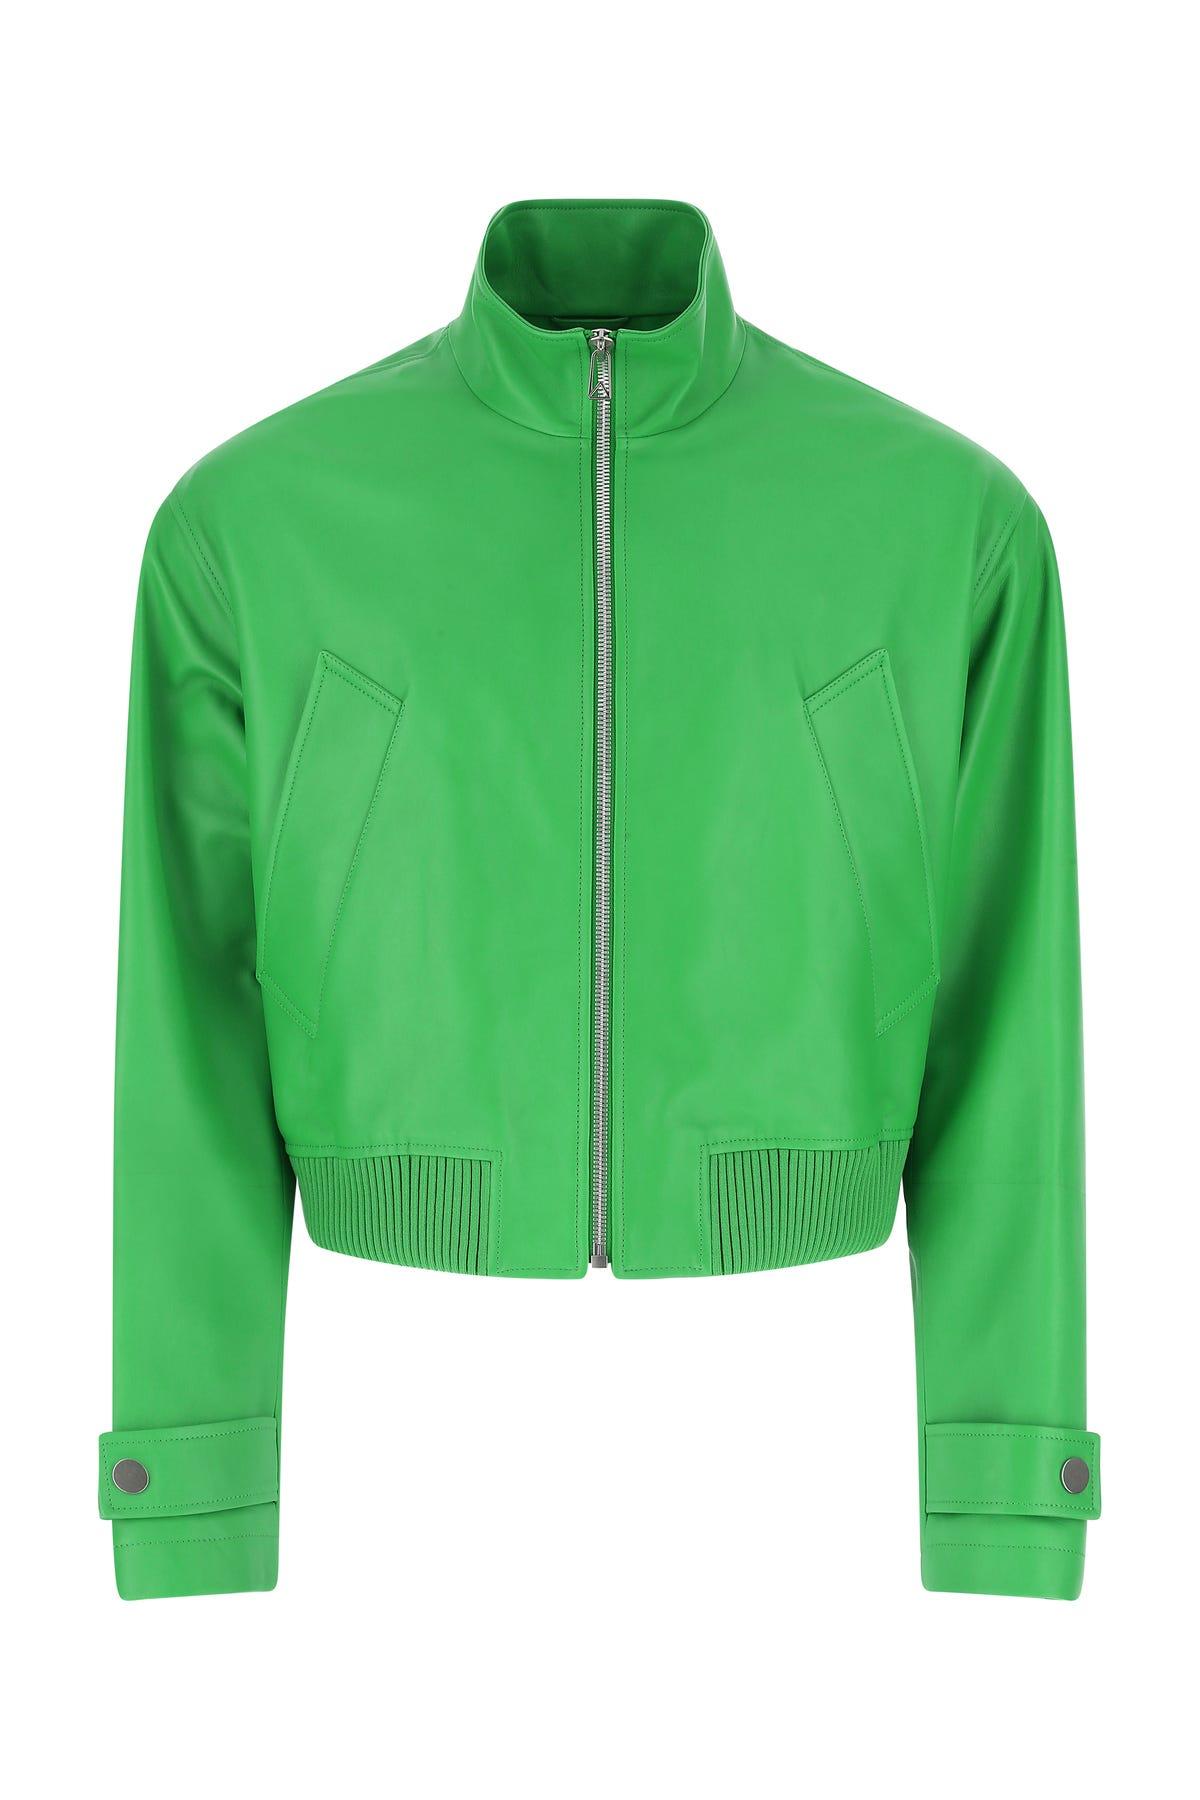 Bottega Veneta Nappa Leather Jacket in Green for Men | Lyst